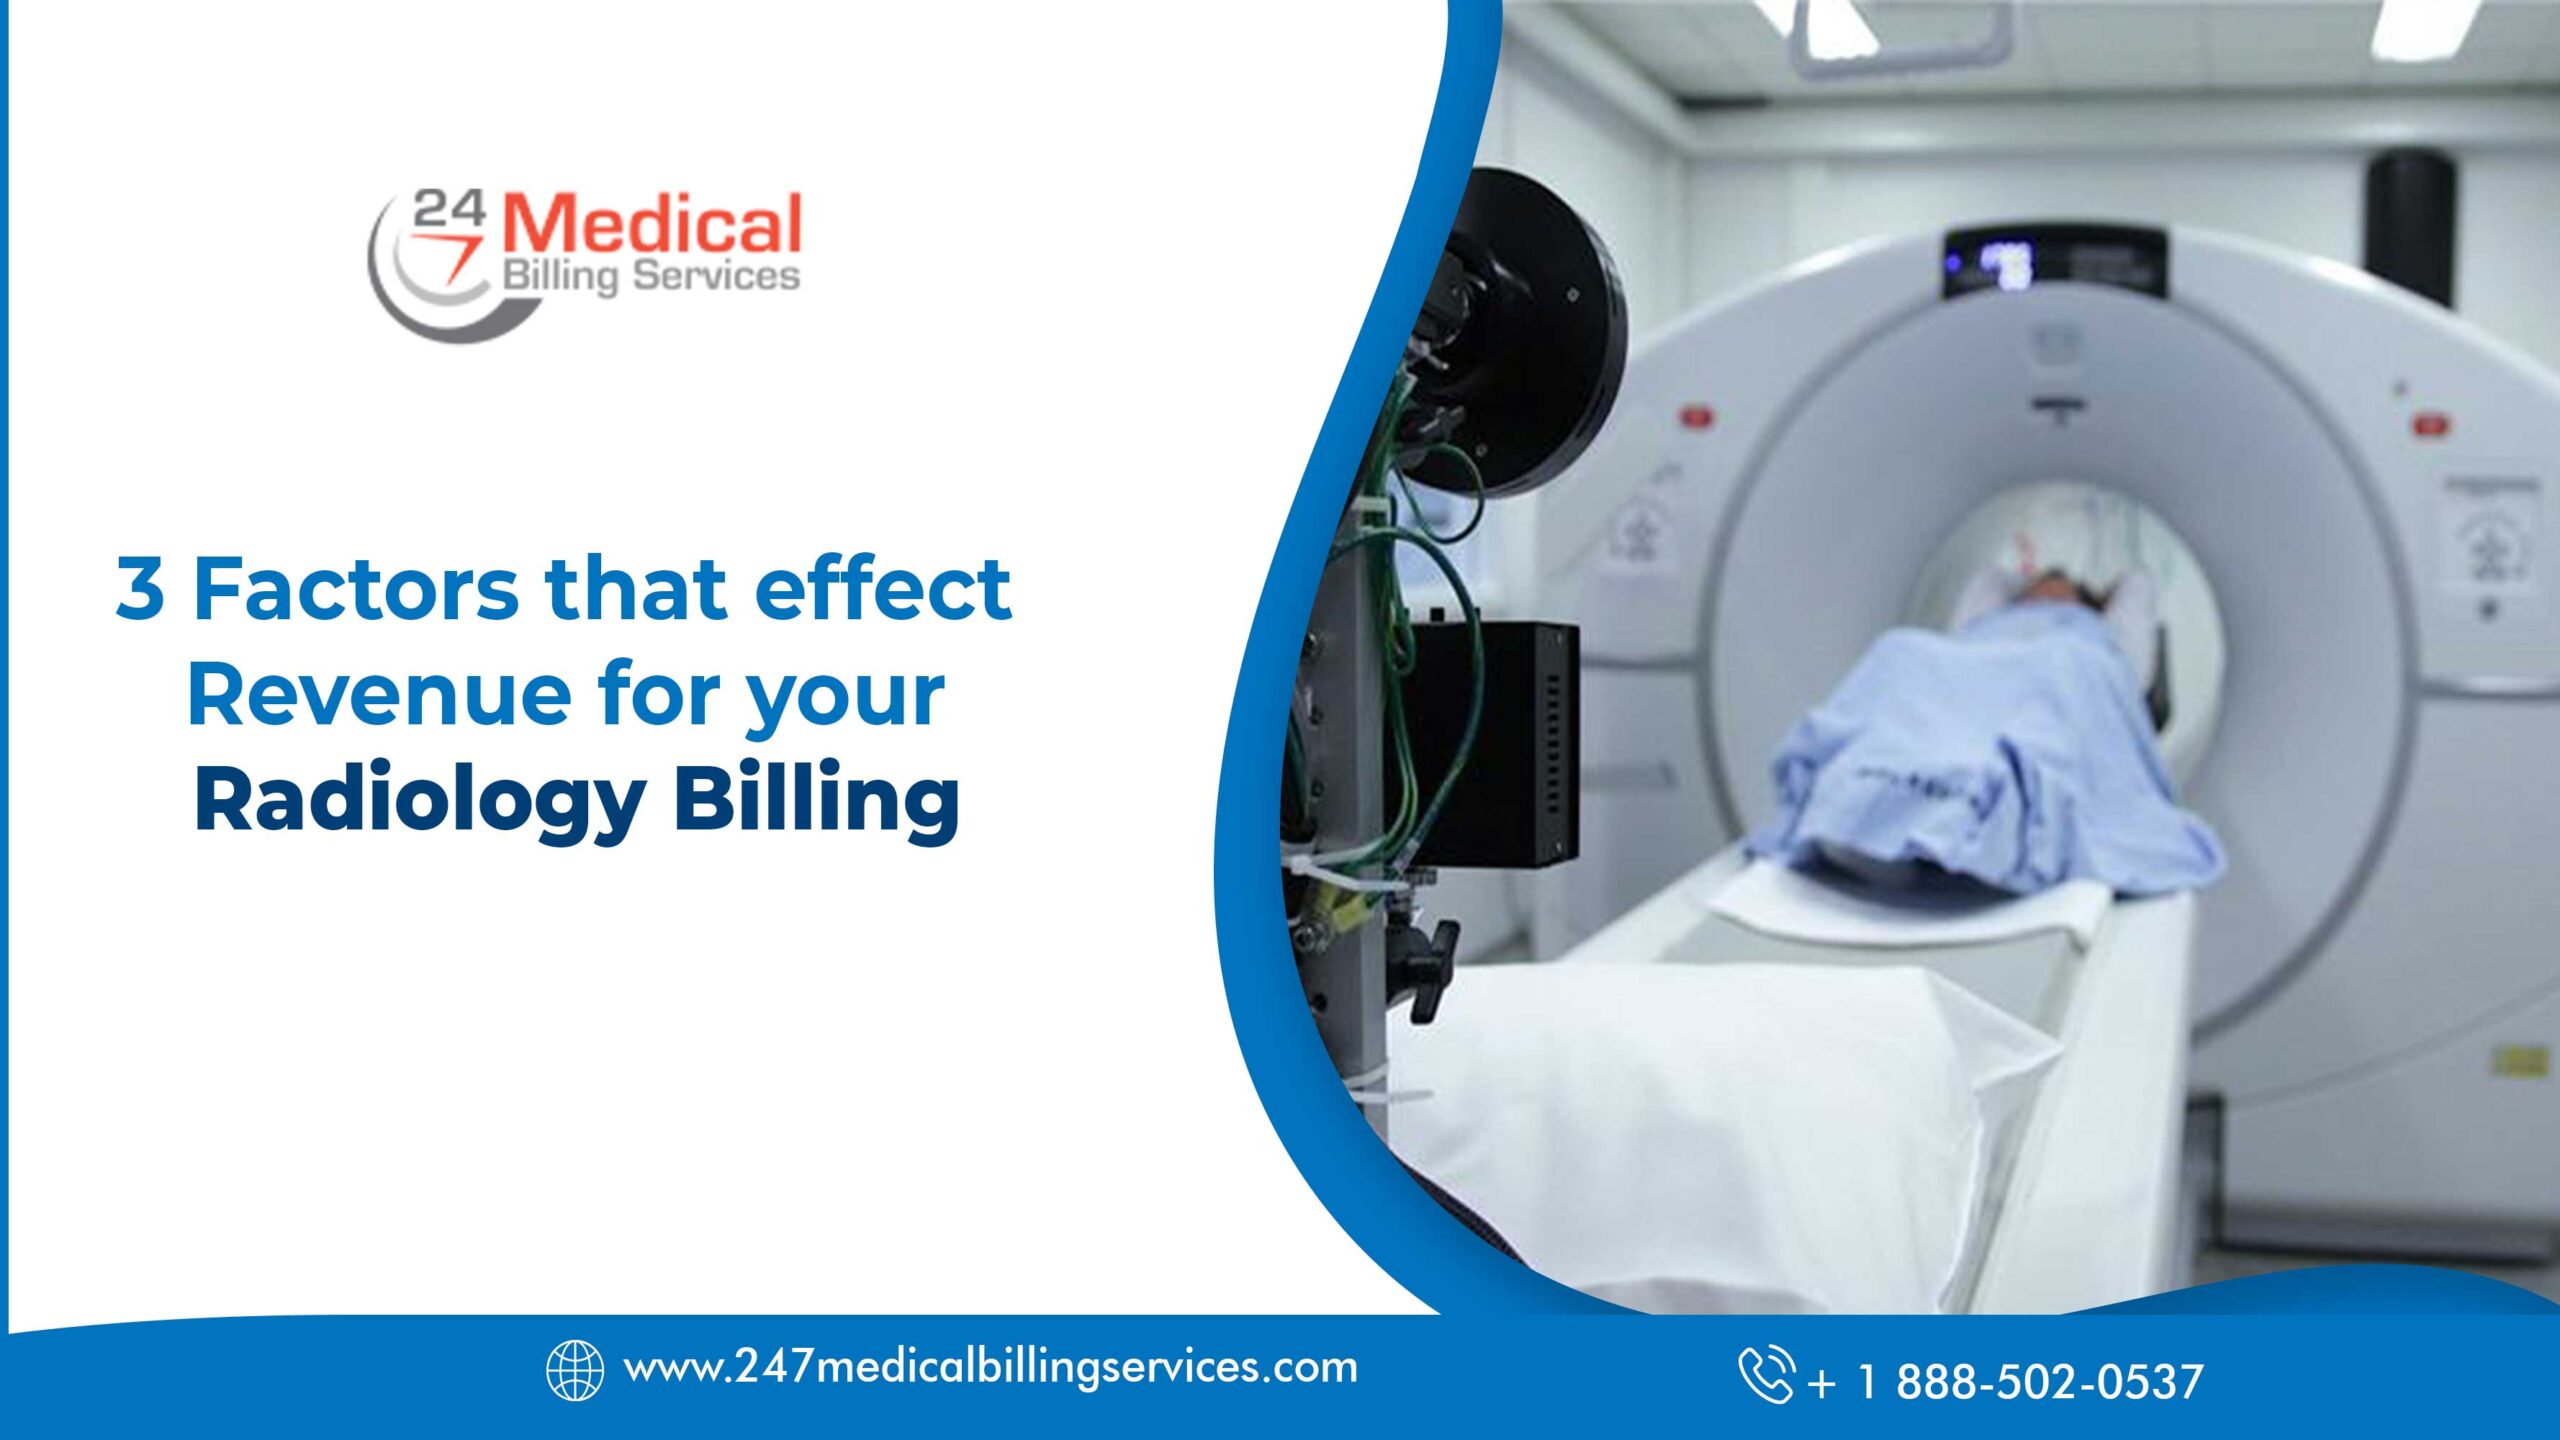  3 Factors that affect Revenue for your Radiology Billing